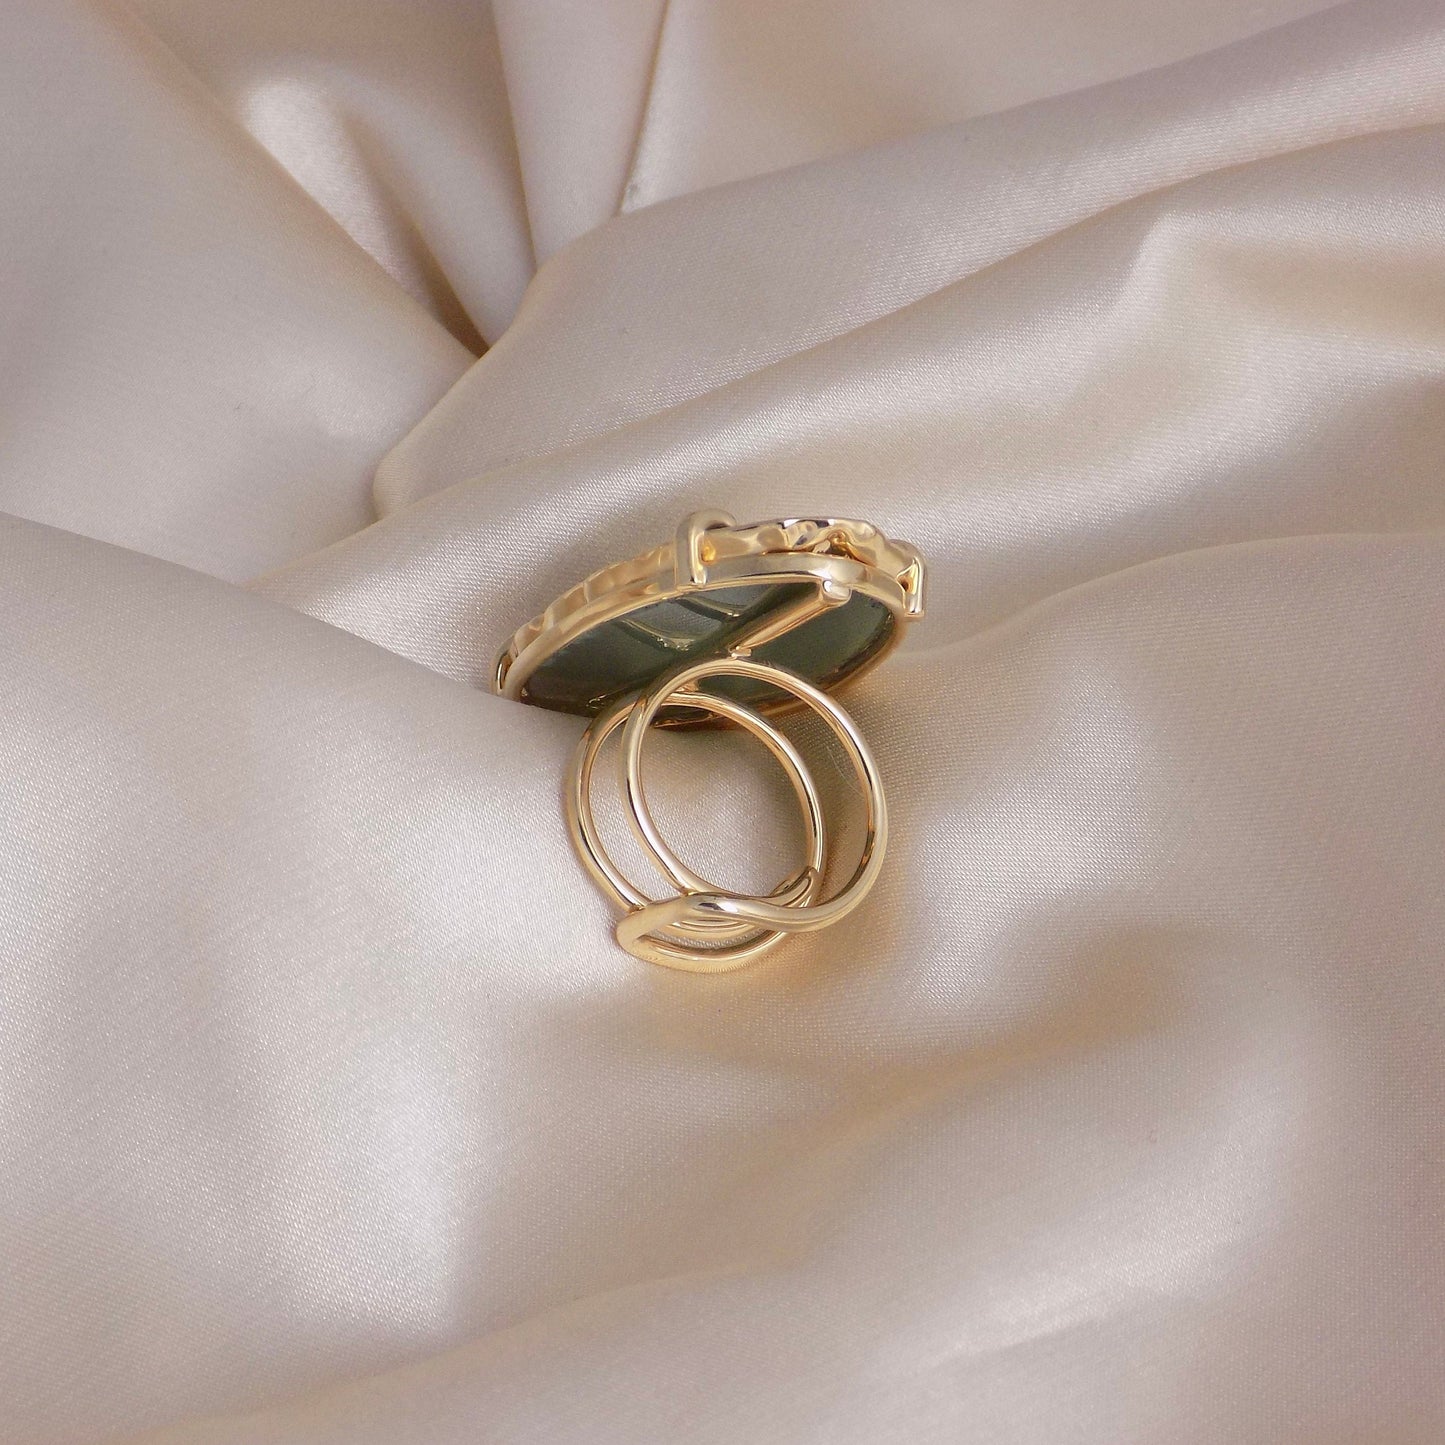 Dark Green Agate Gemstone Ring Adjustable, Gold Dipped Large Natural Stone, G14-293